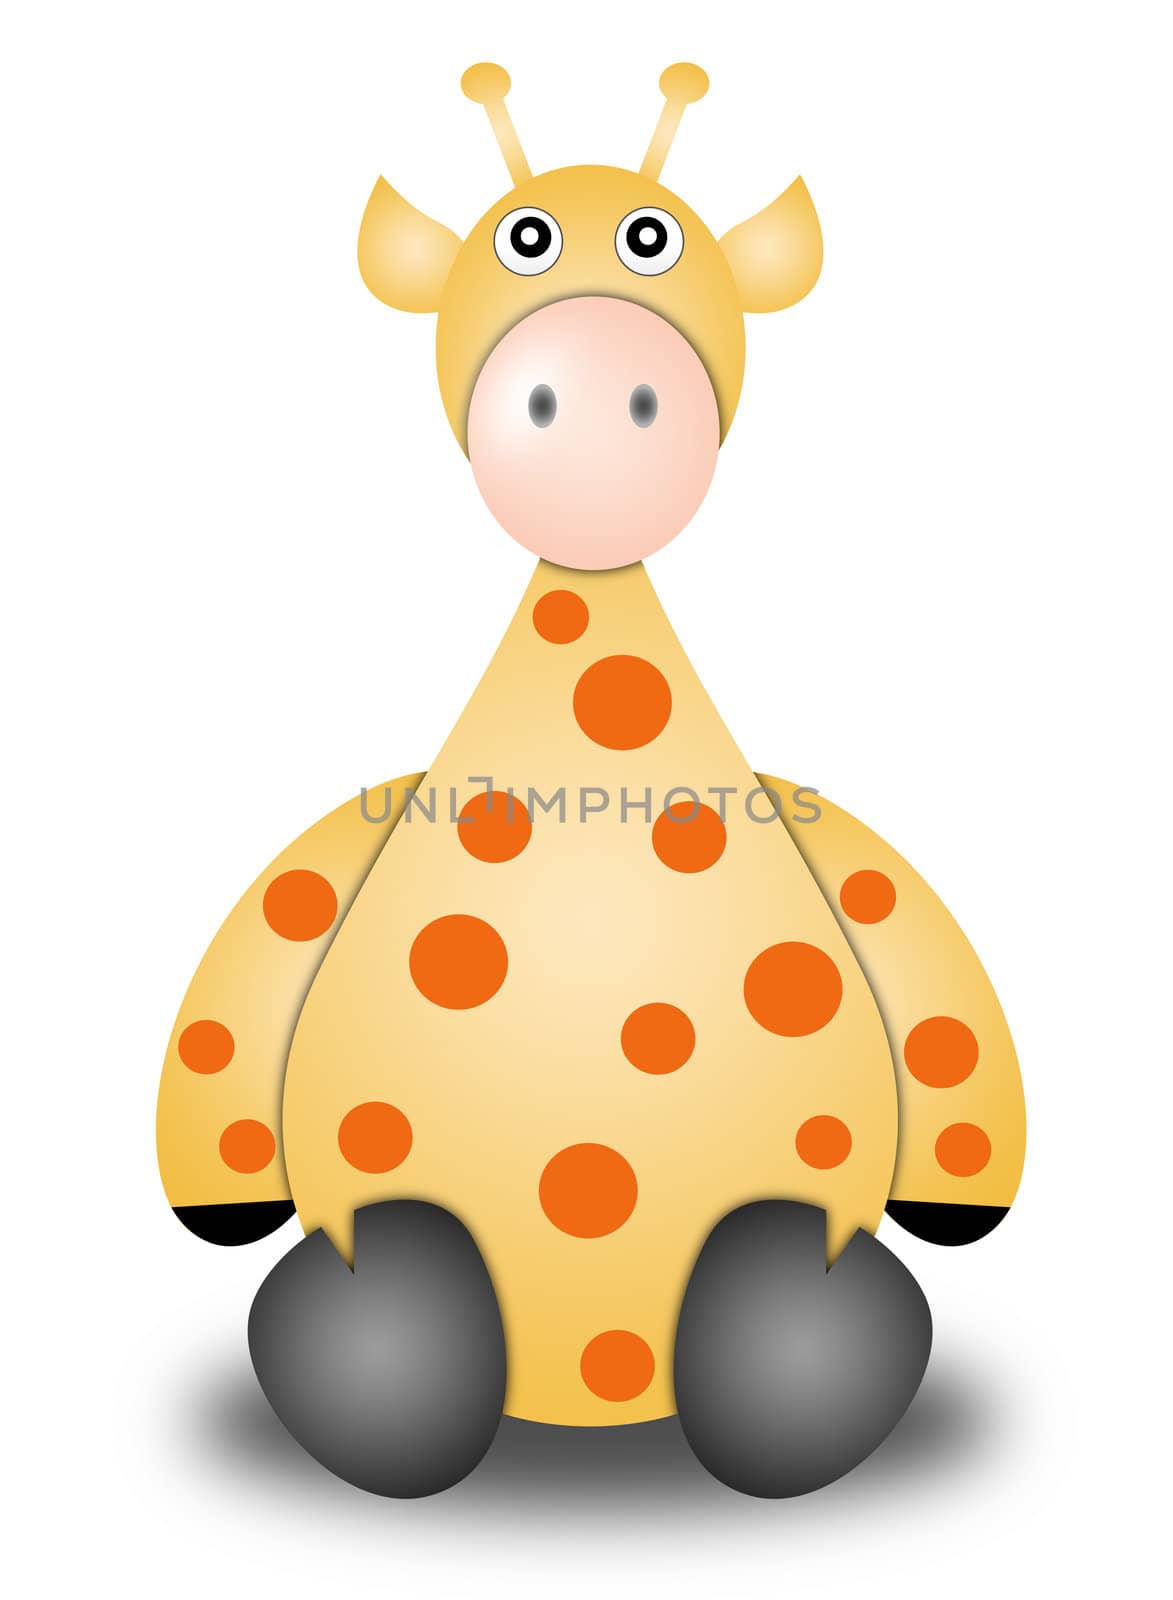 giraffe. Illustration cartoon style. white background